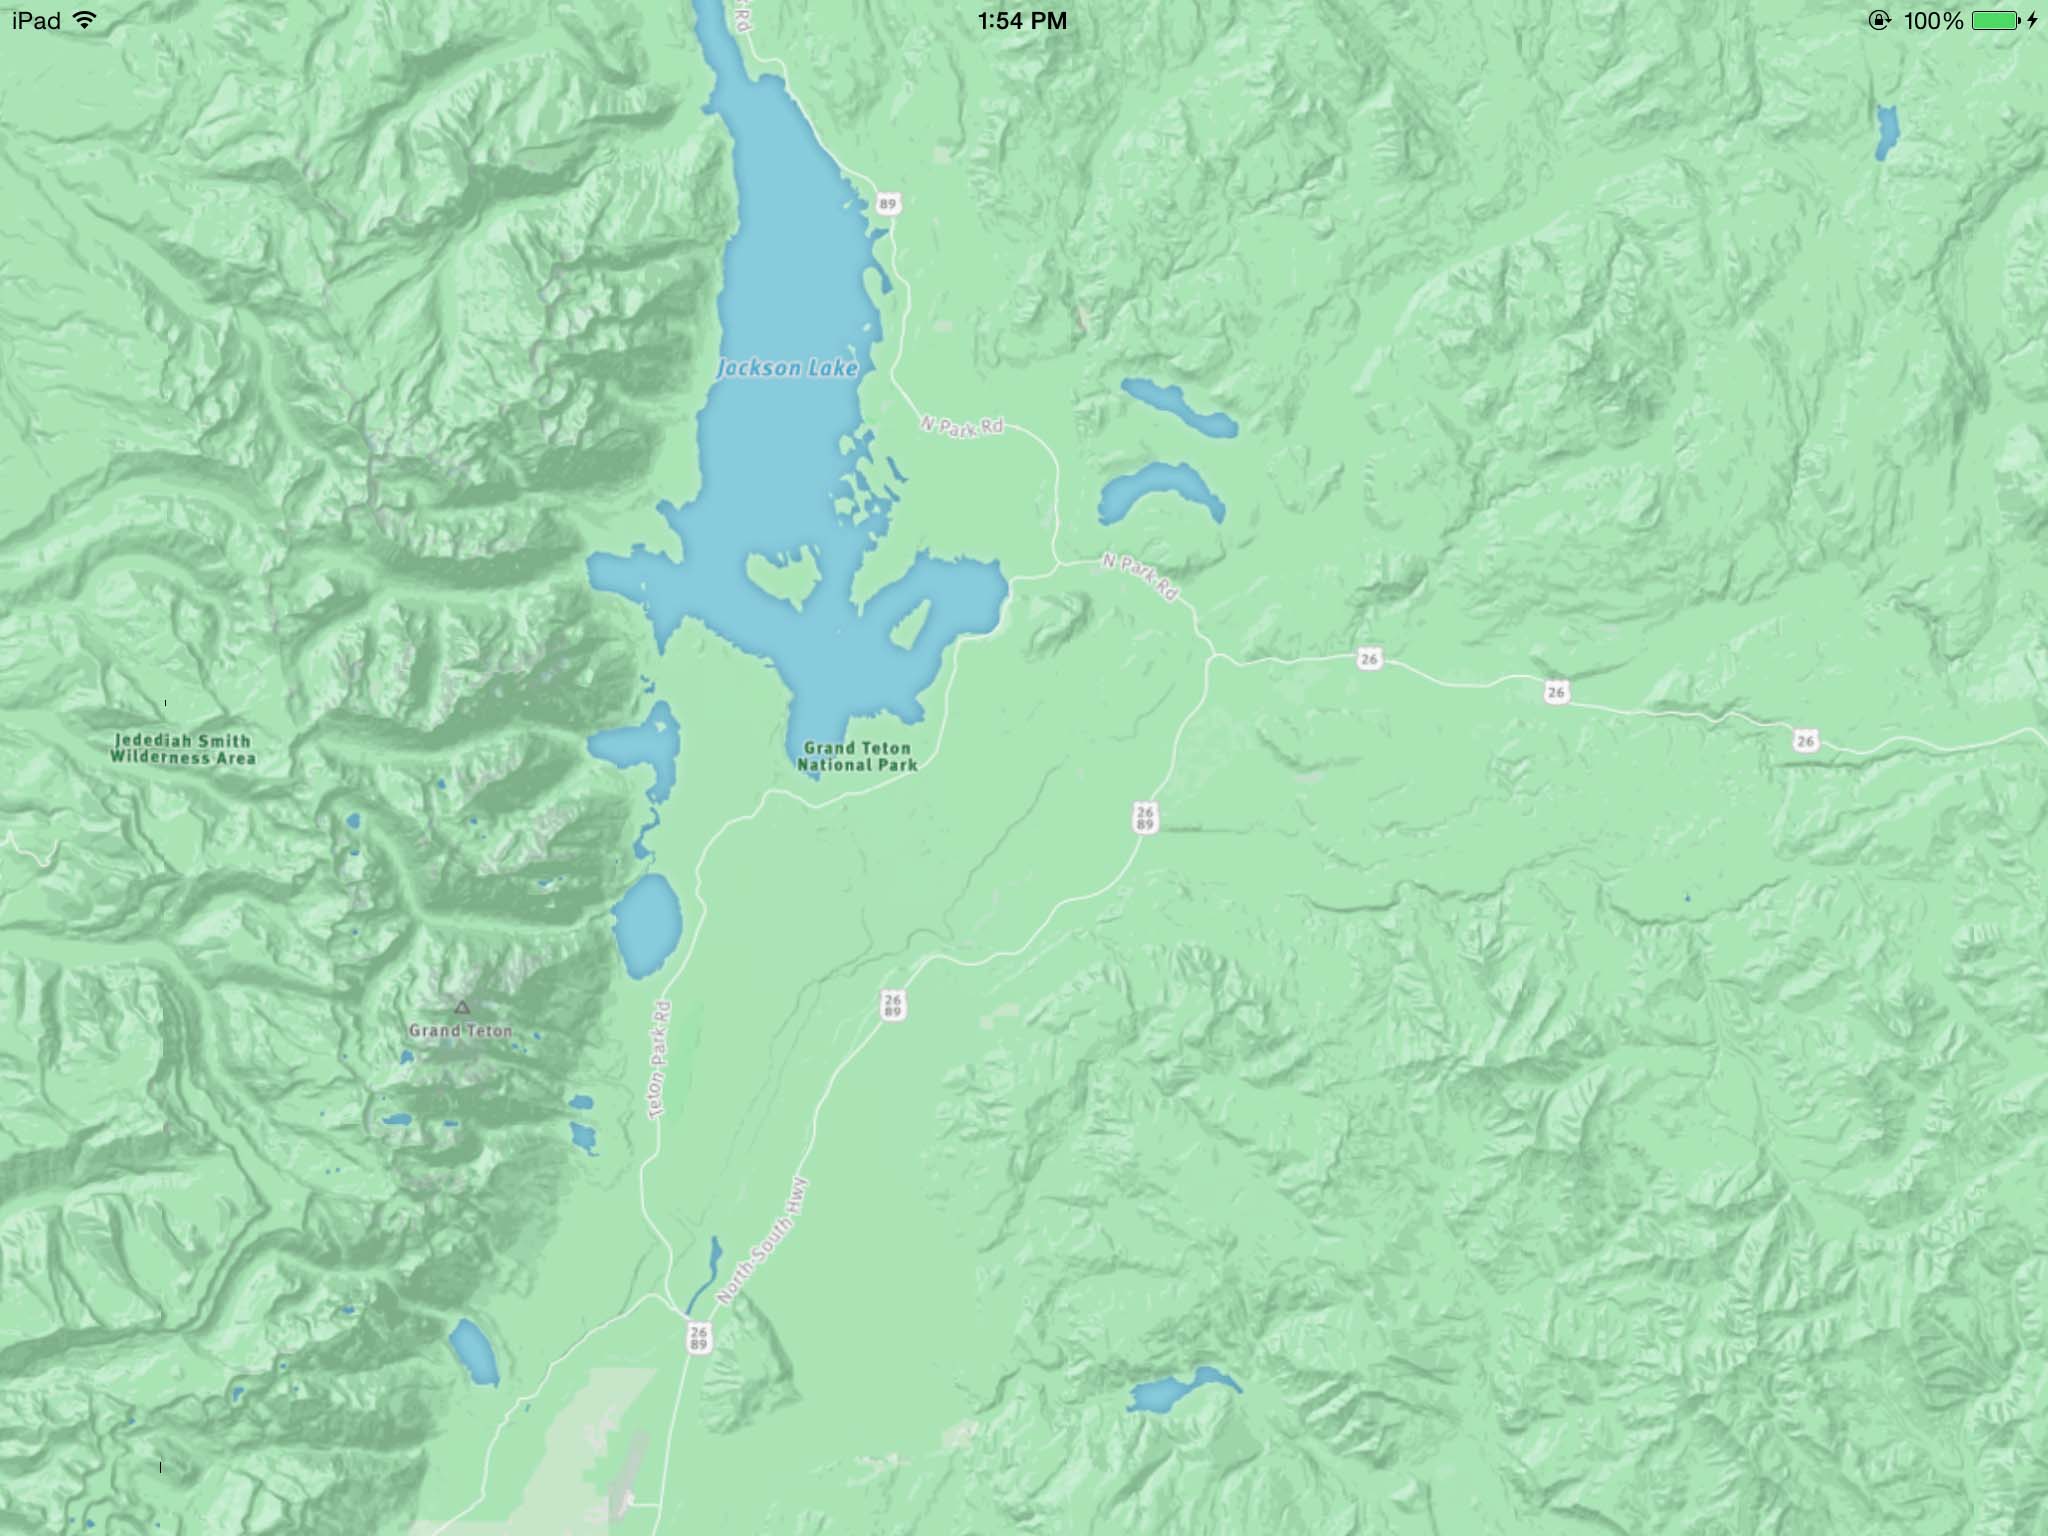 Grand Teton National Park in the Terrain Map layer